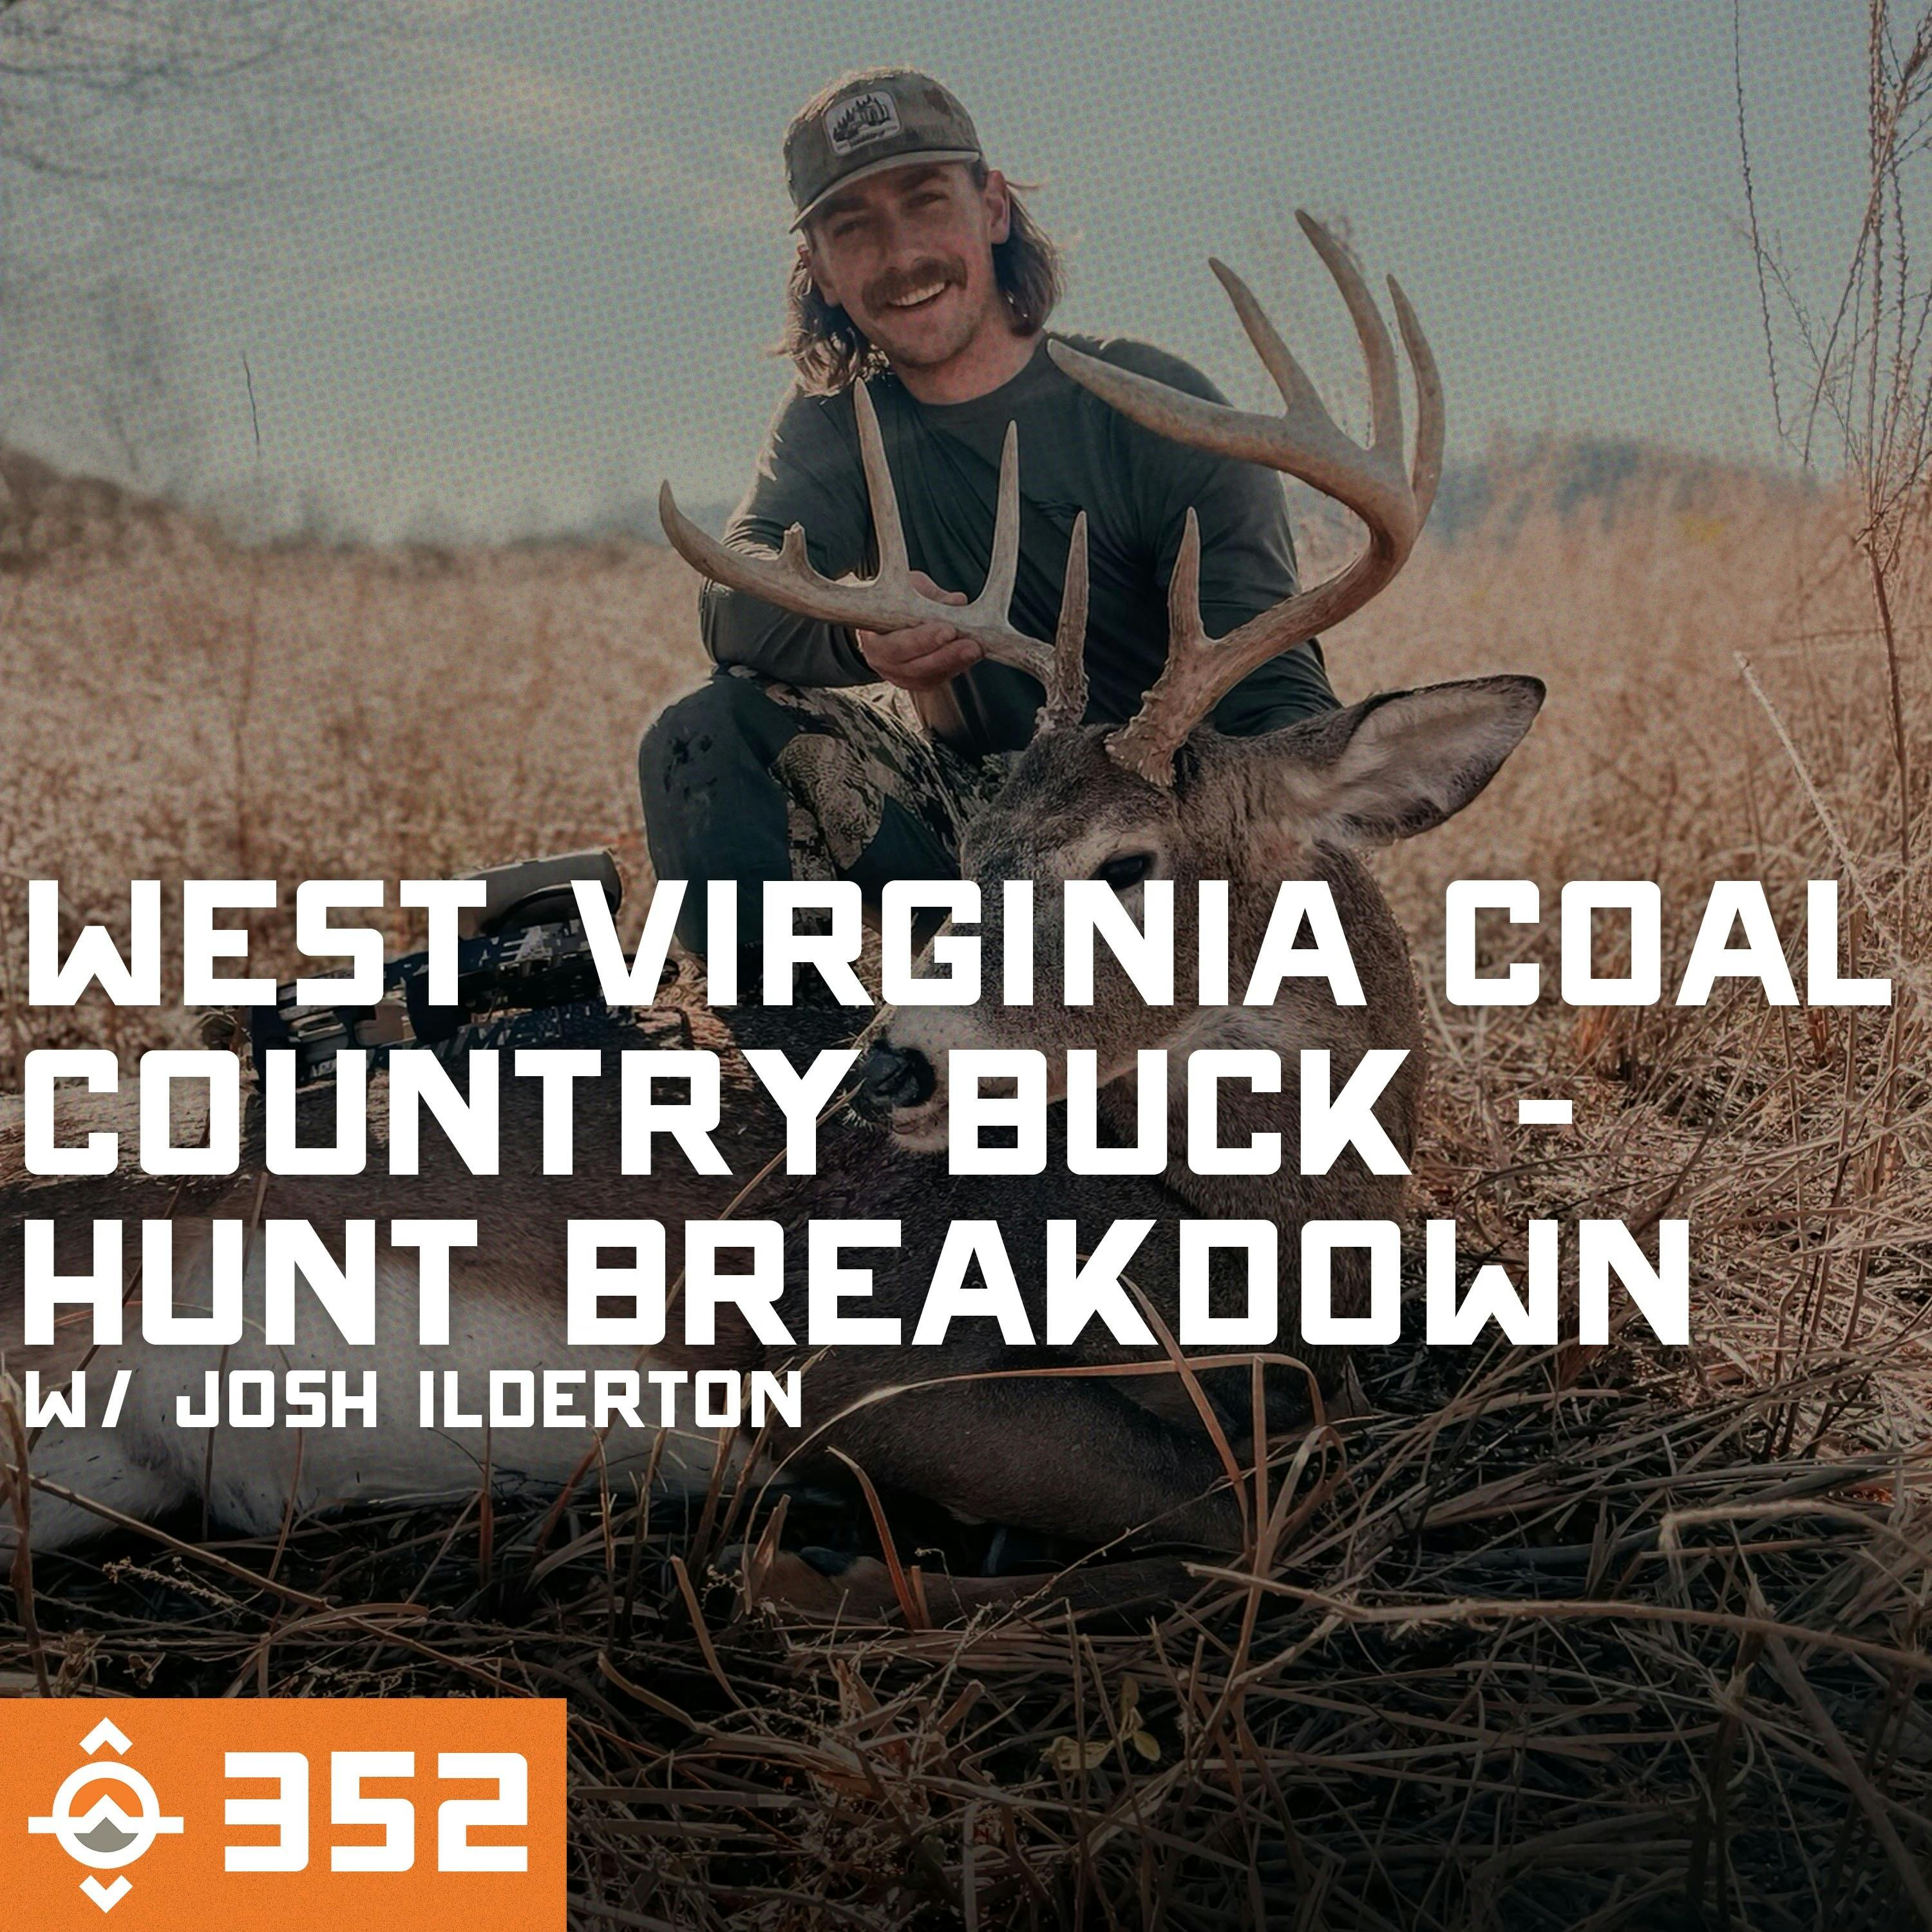 Ep. 352: My West Virginia Coal Country Buck (6 HOUR STALK!) - Hunt Breakdown with Josh Ilderton // The Untamed